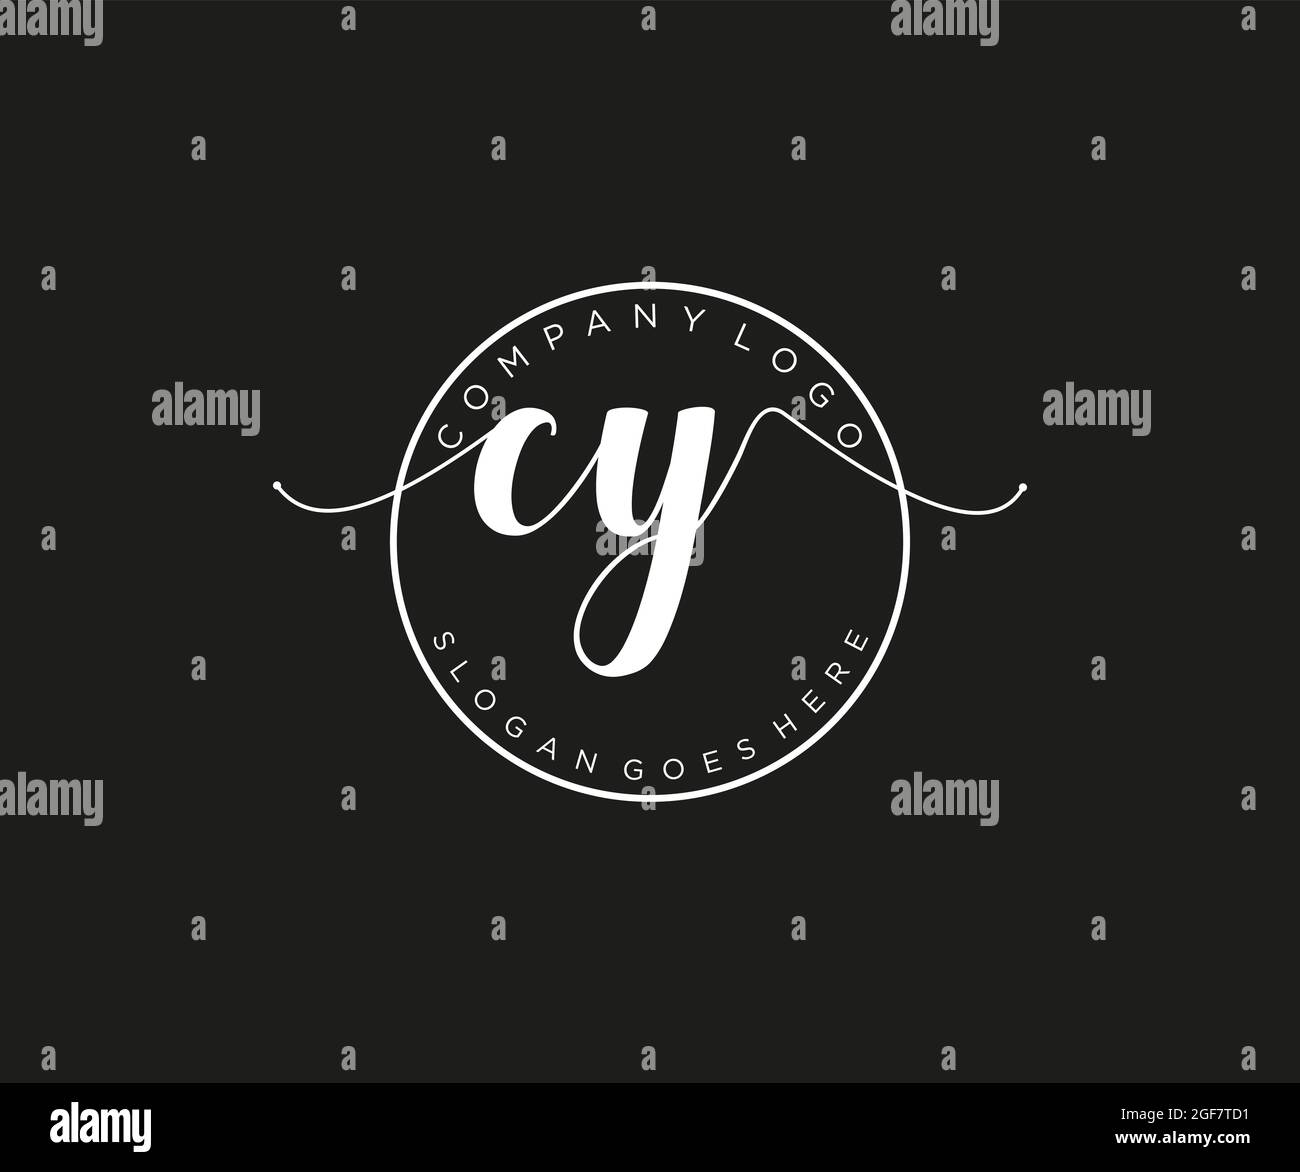 CY Feminine logo beauty monogram and elegant logo design, handwriting logo of initial signature, wedding, fashion, floral and botanical with creative Stock Vector